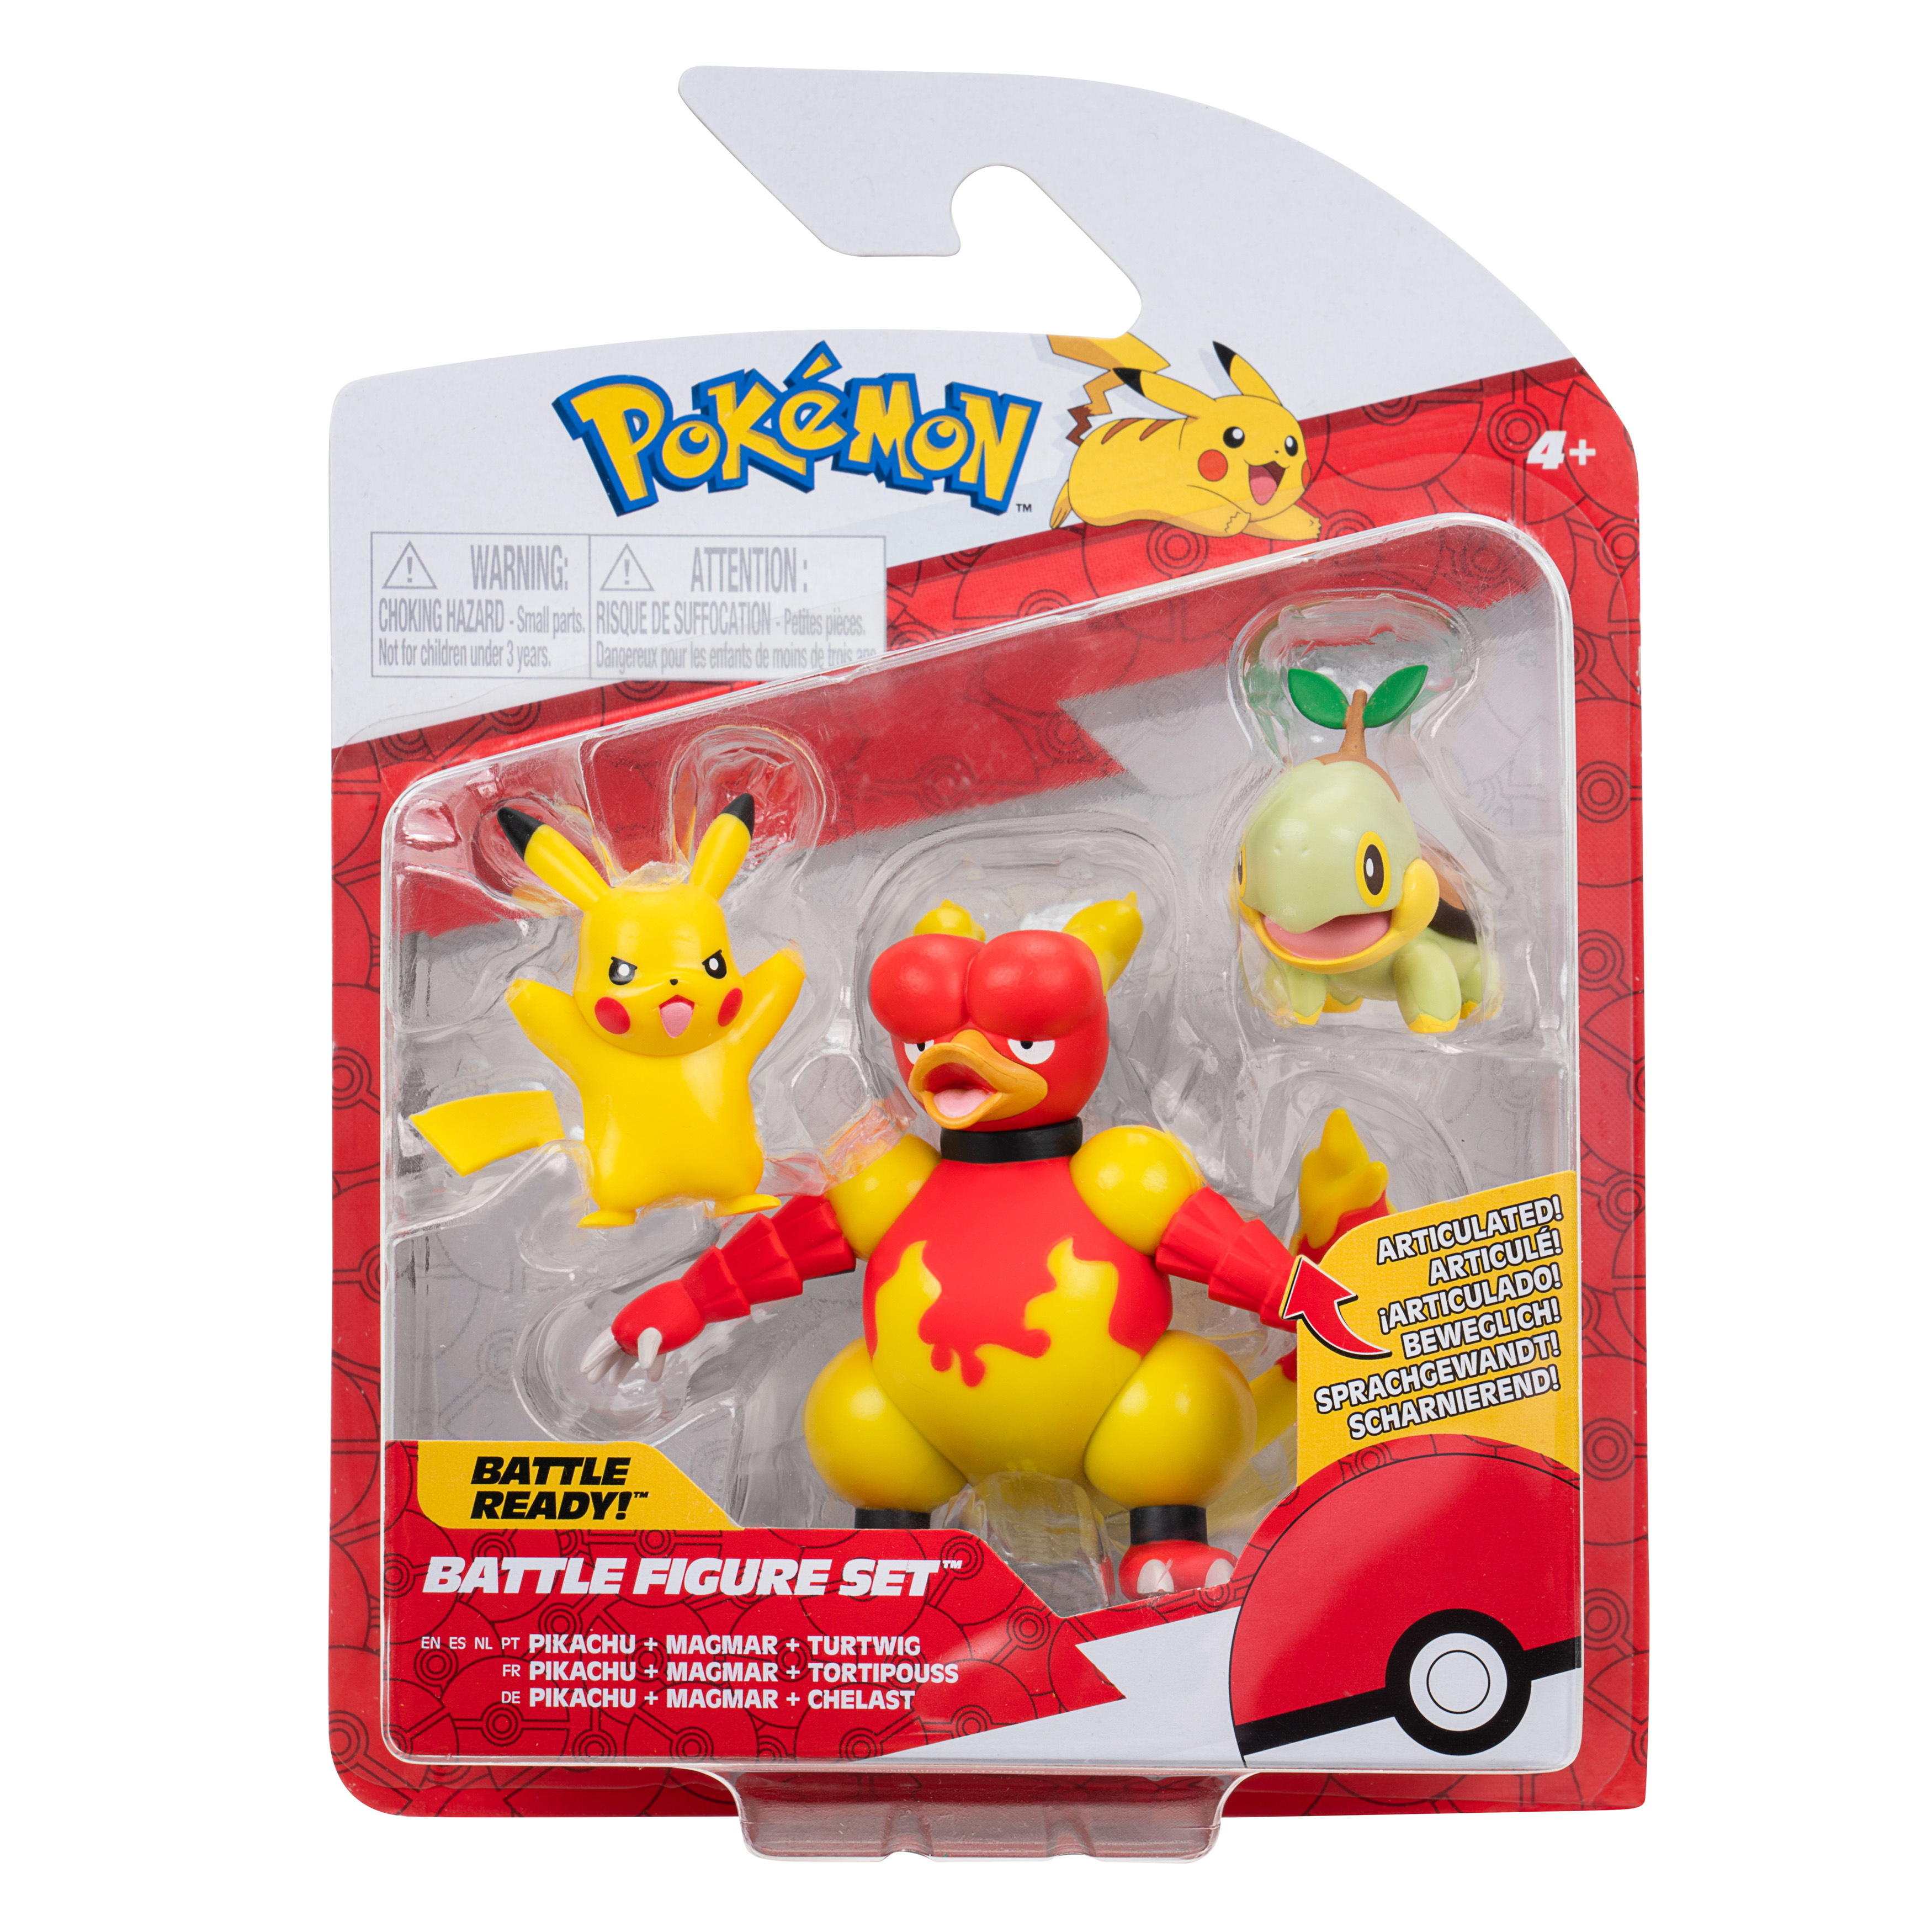 Pokémon - Battle Figur 3er Pack - Chelast, Pikachu#9 & Magmar